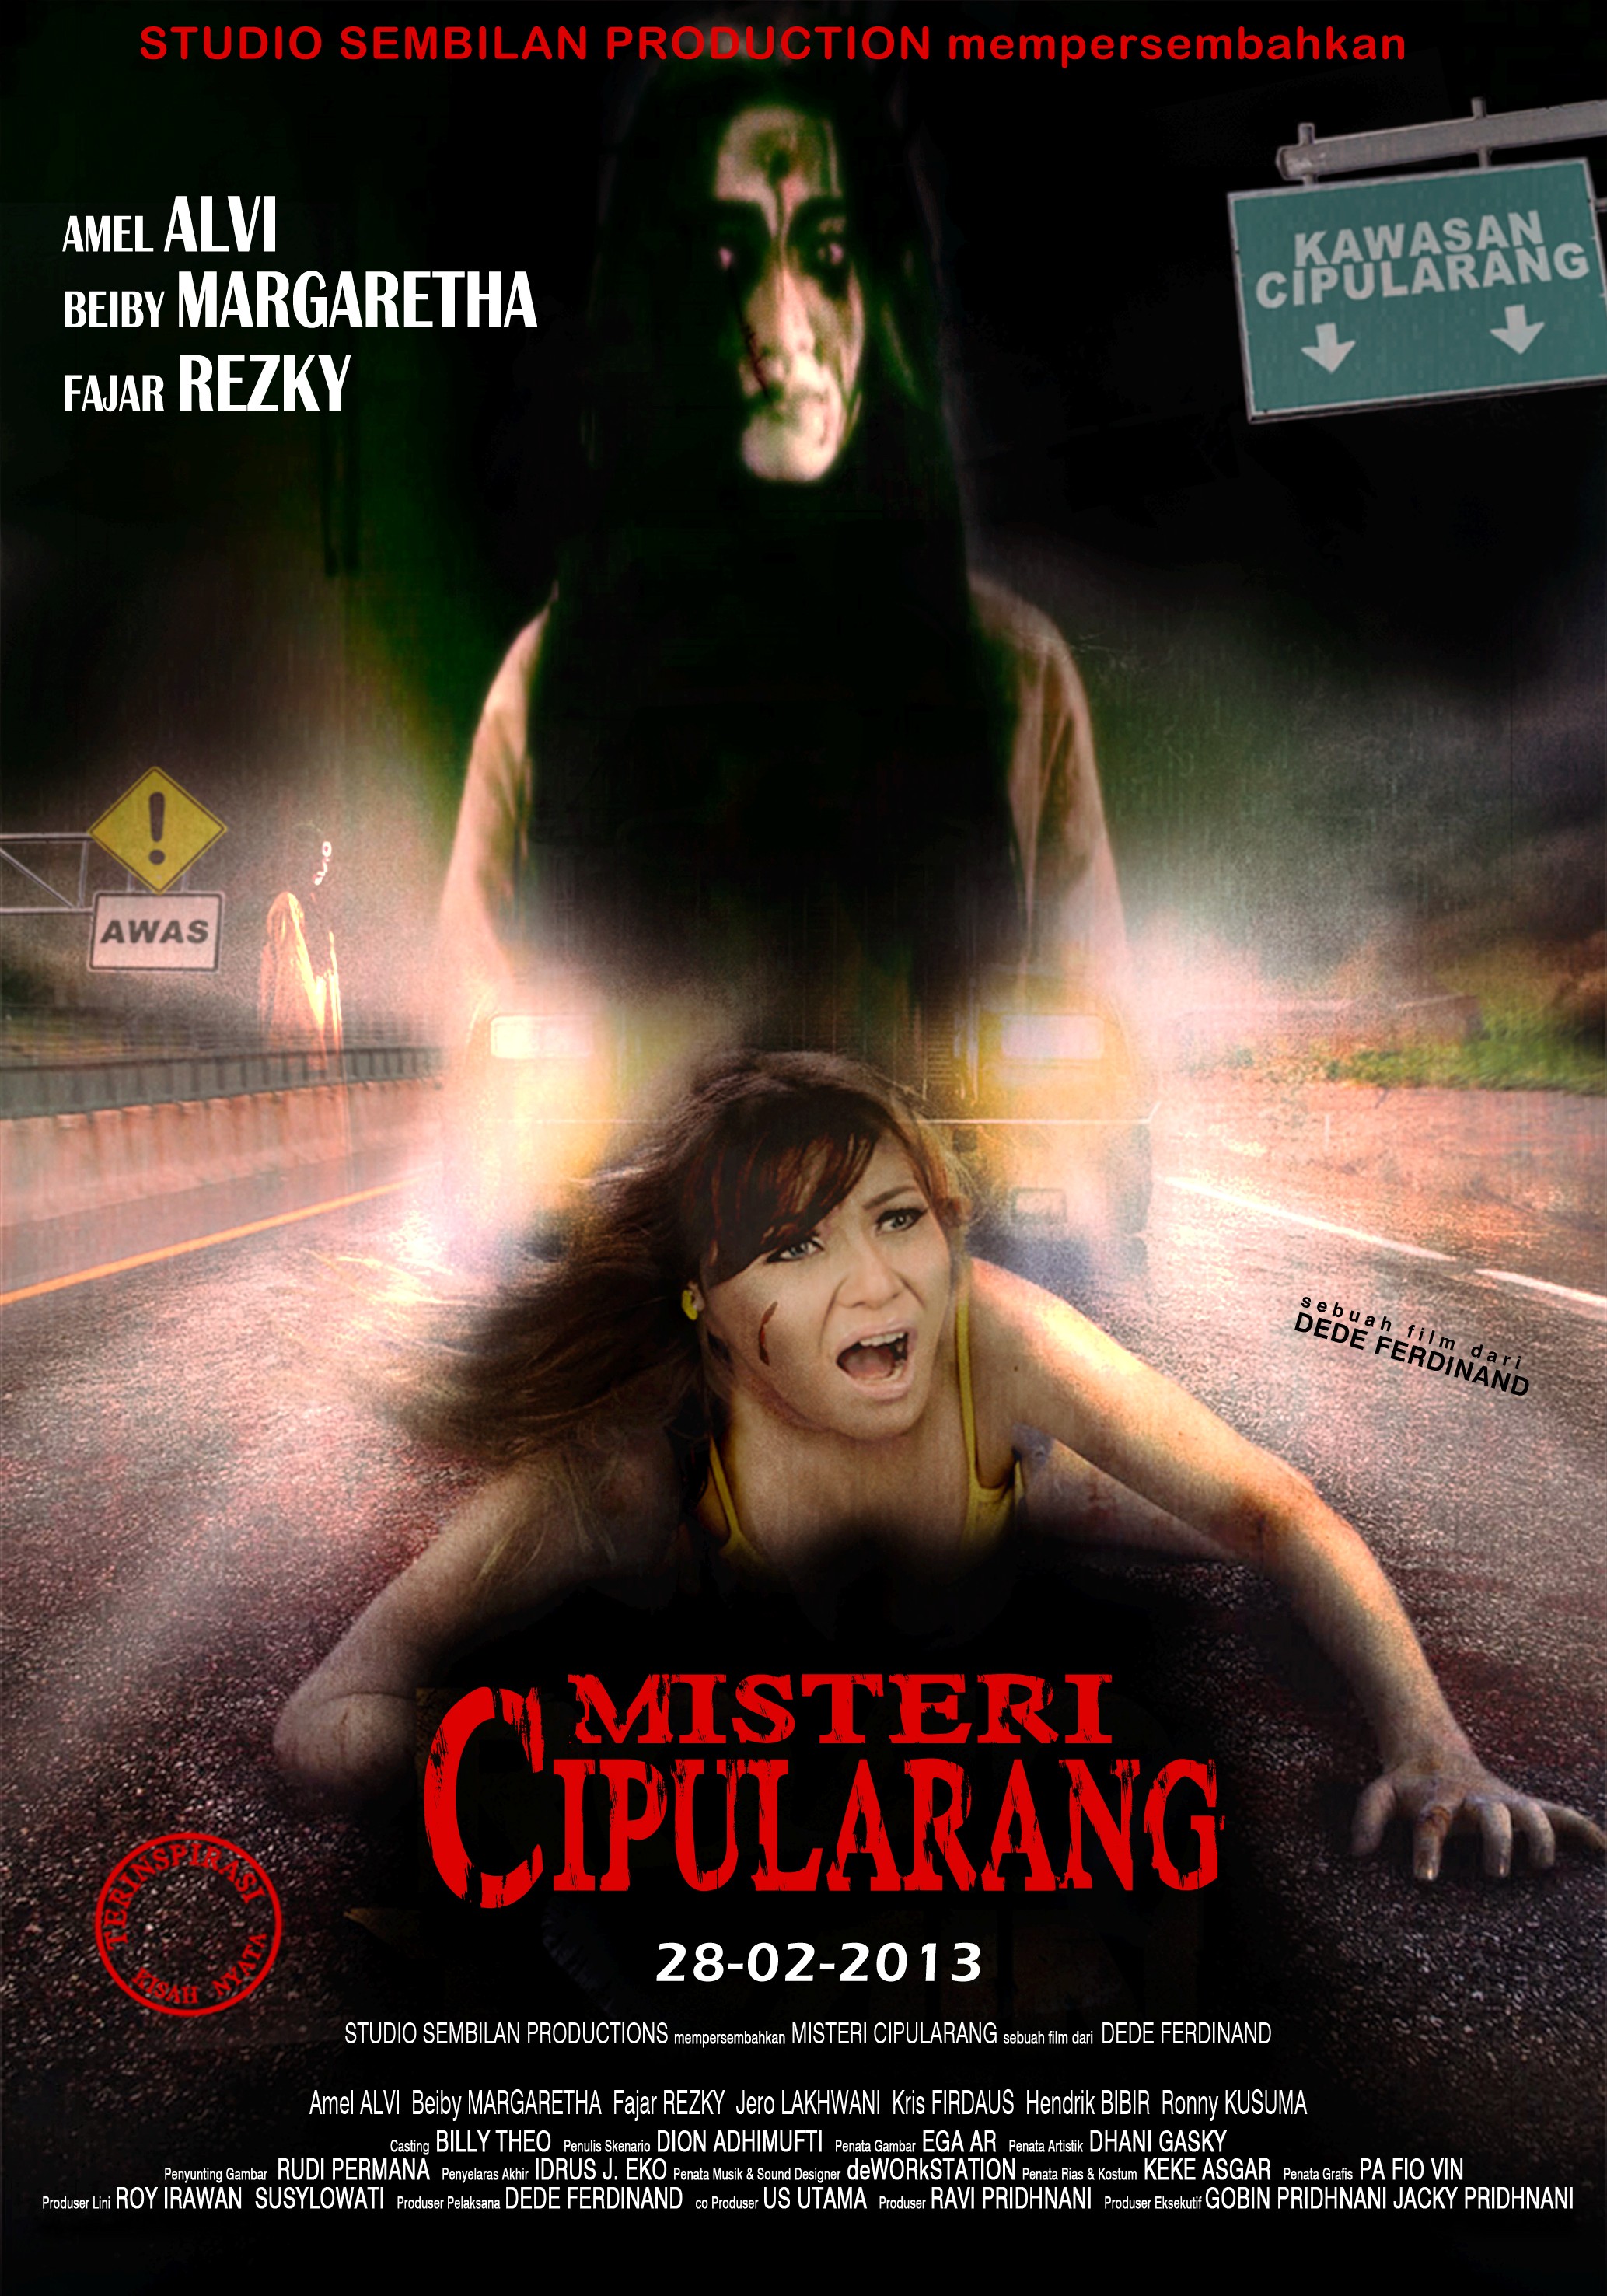 Mega Sized Movie Poster Image for Misteri Cipularang (#2 of 2)